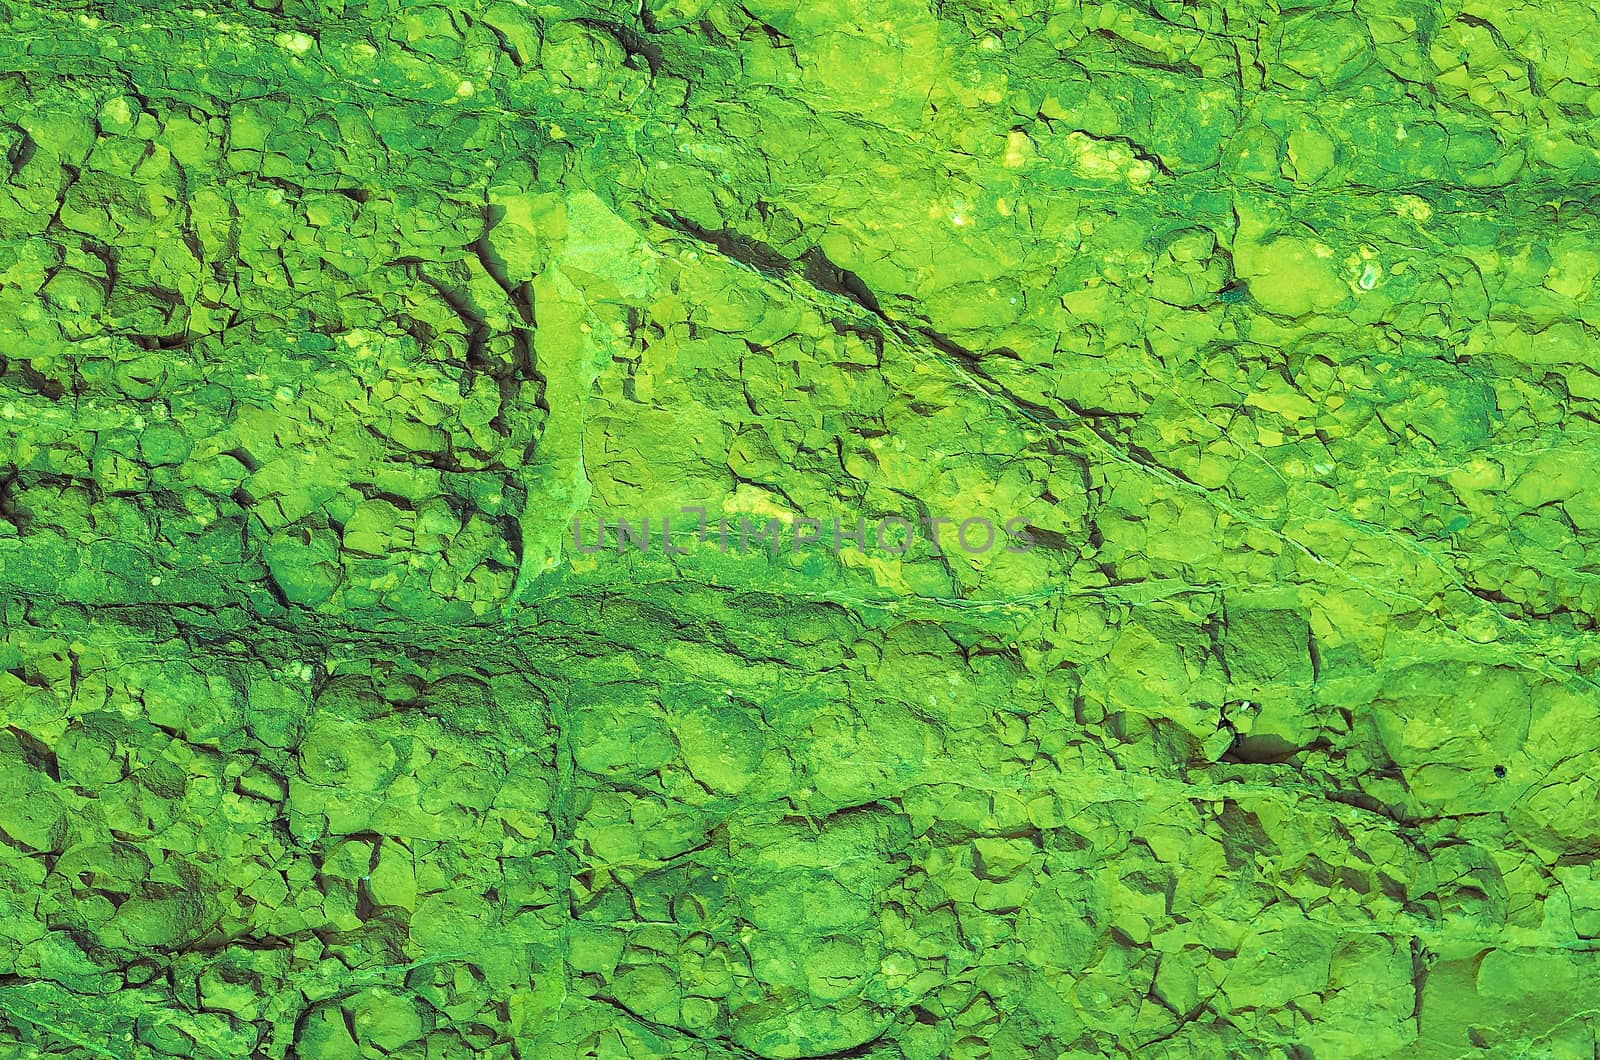 Green Rock Texture Background by kobfujar